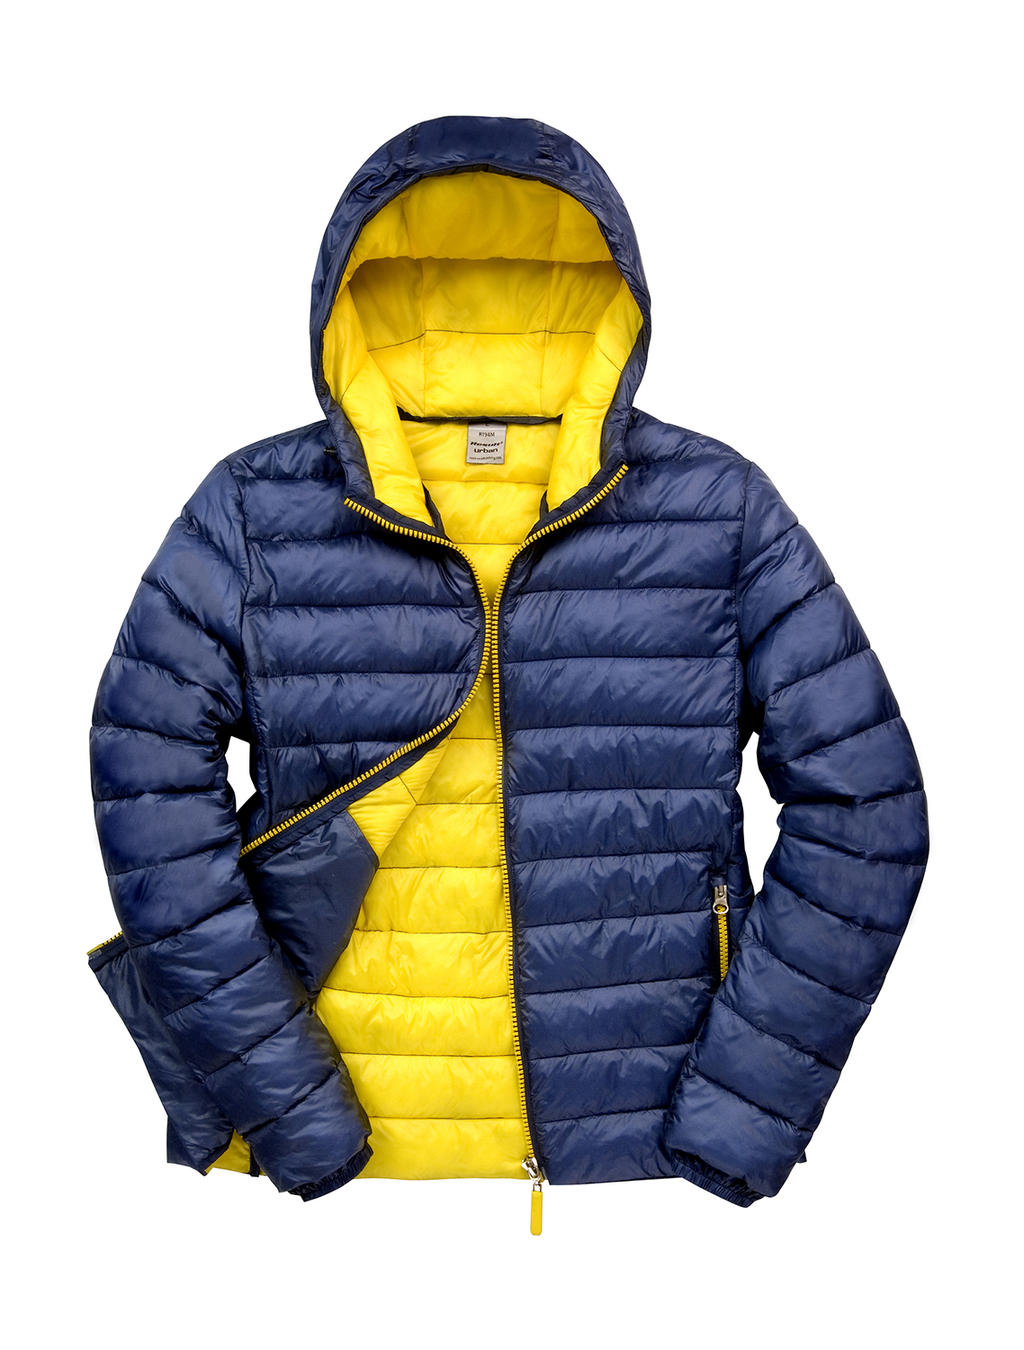 Pánská Snow Bird bunda s kapucí Velikost: M, Barva: Navy/Yellow